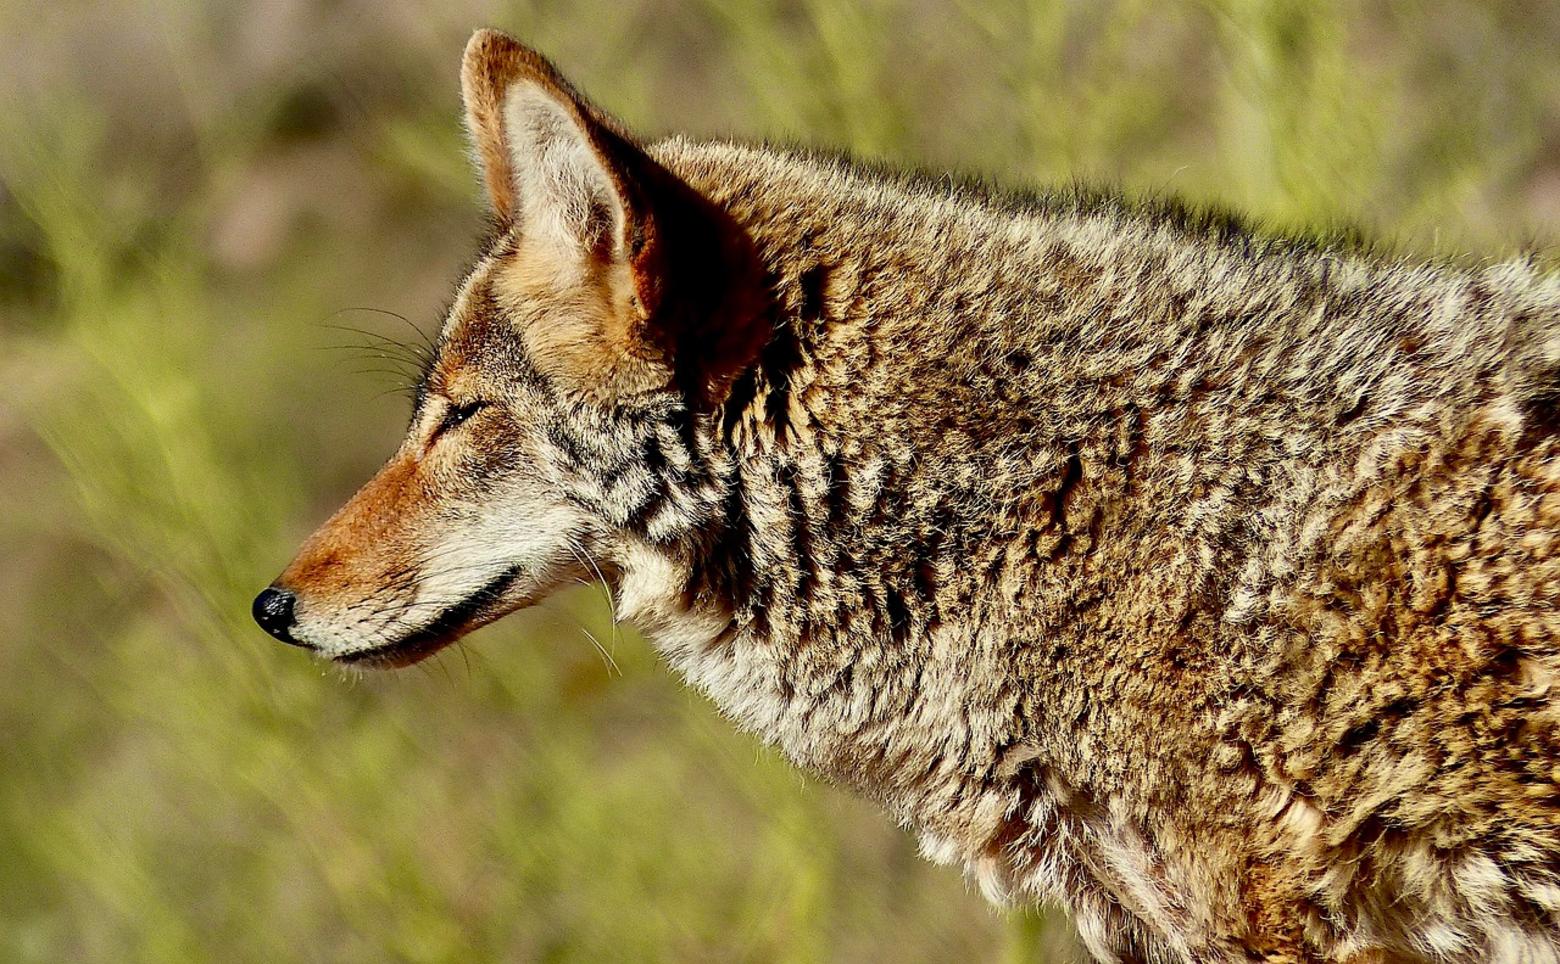 Coyote photo courtesy Rene Rauschenberger (Pixabay/Creative License)